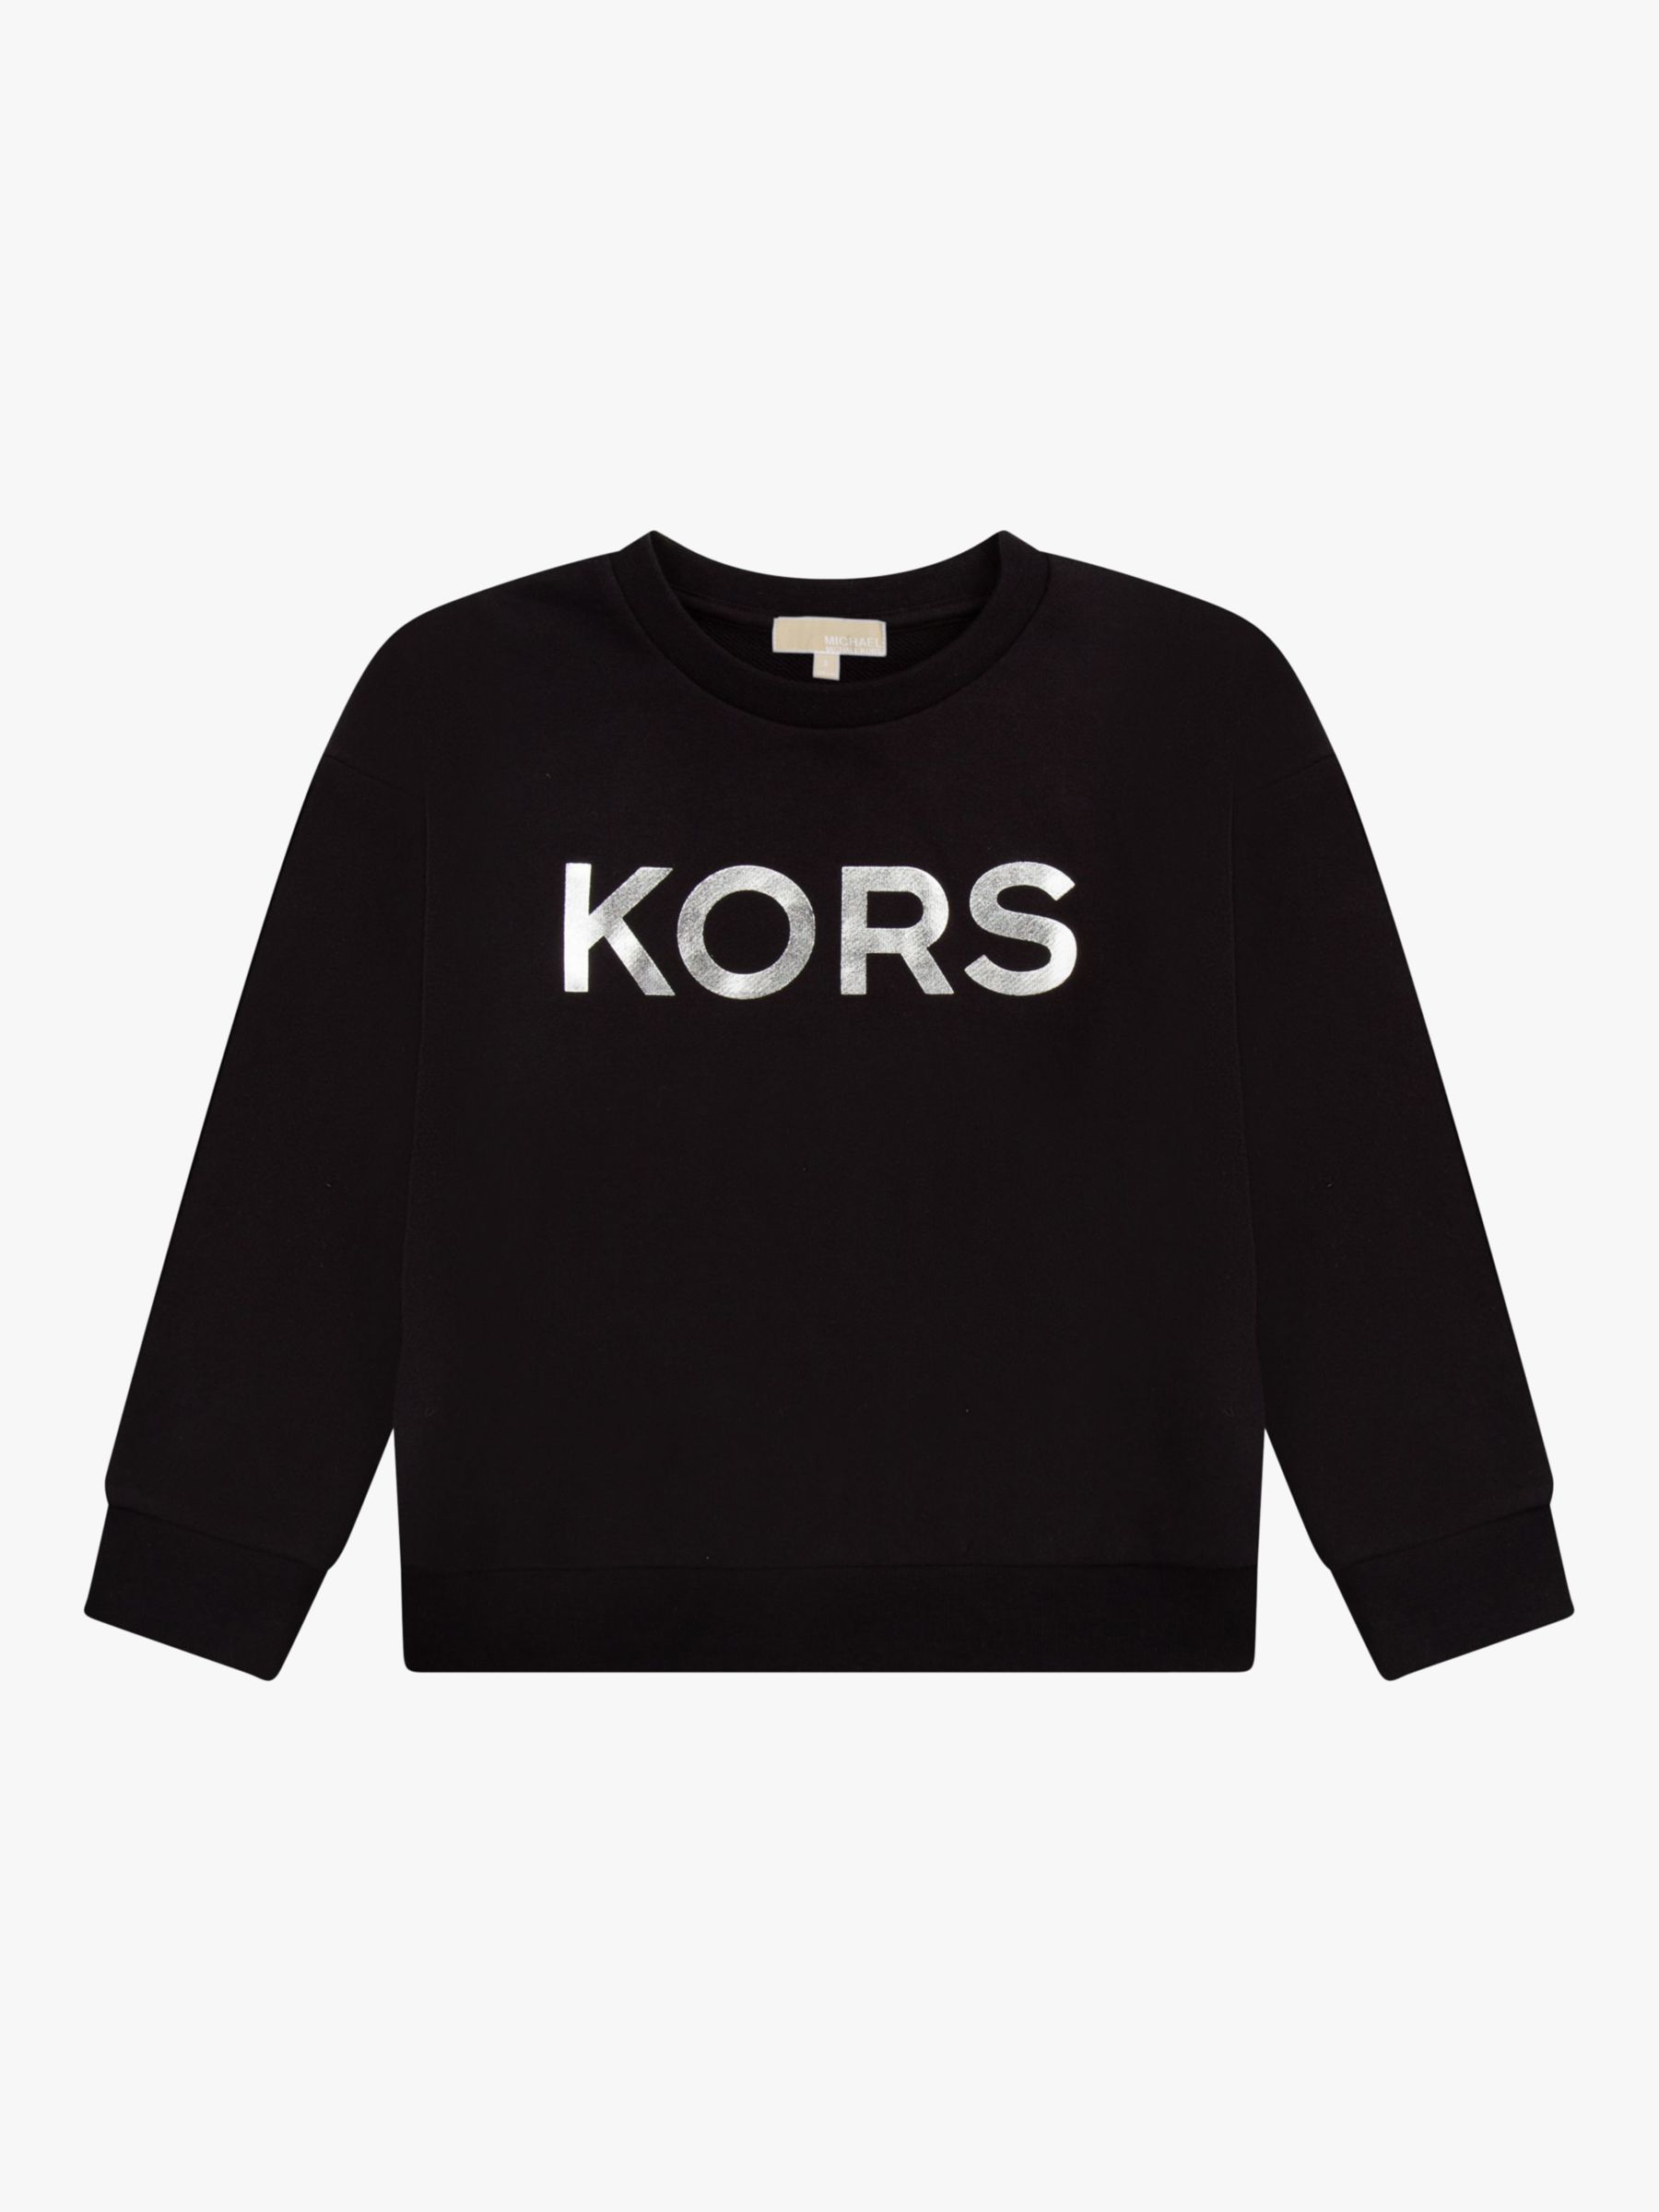 Michael Kors Kids' KORS Metallic Logo Jumper, Black at John Lewis & Partners